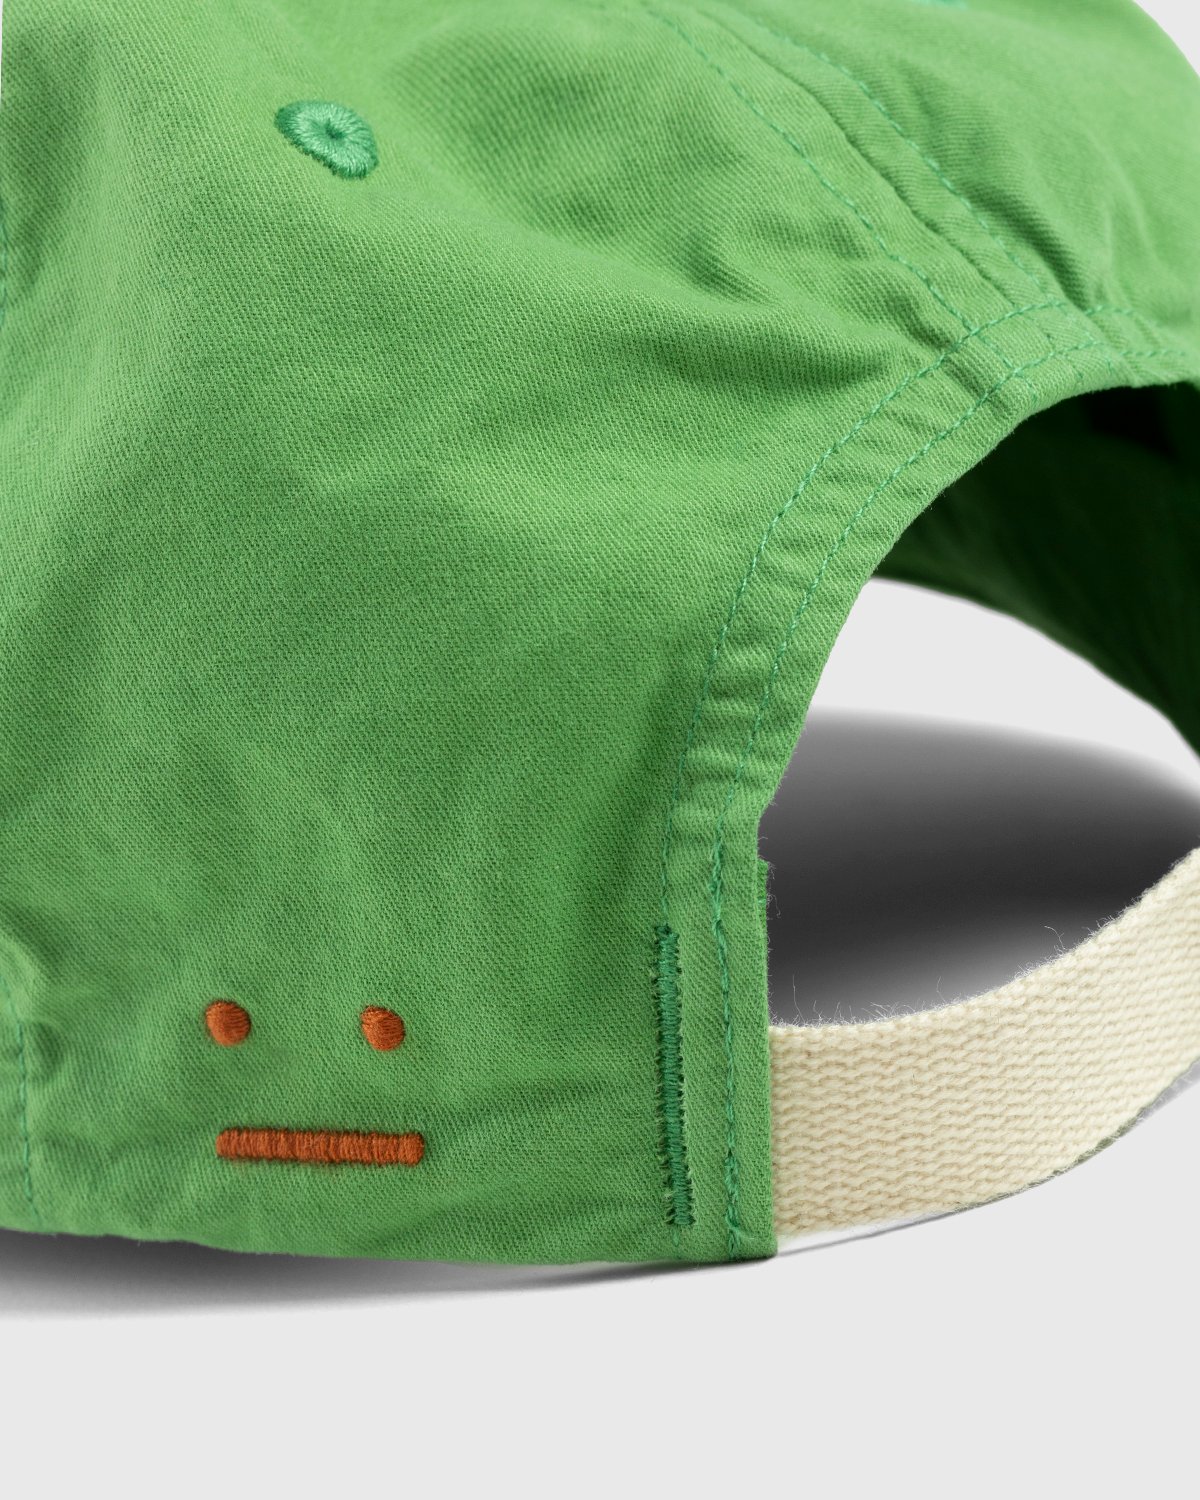 Acne Studios - 6-Panel Baseball Cap Green - Accessories - Green - Image 7